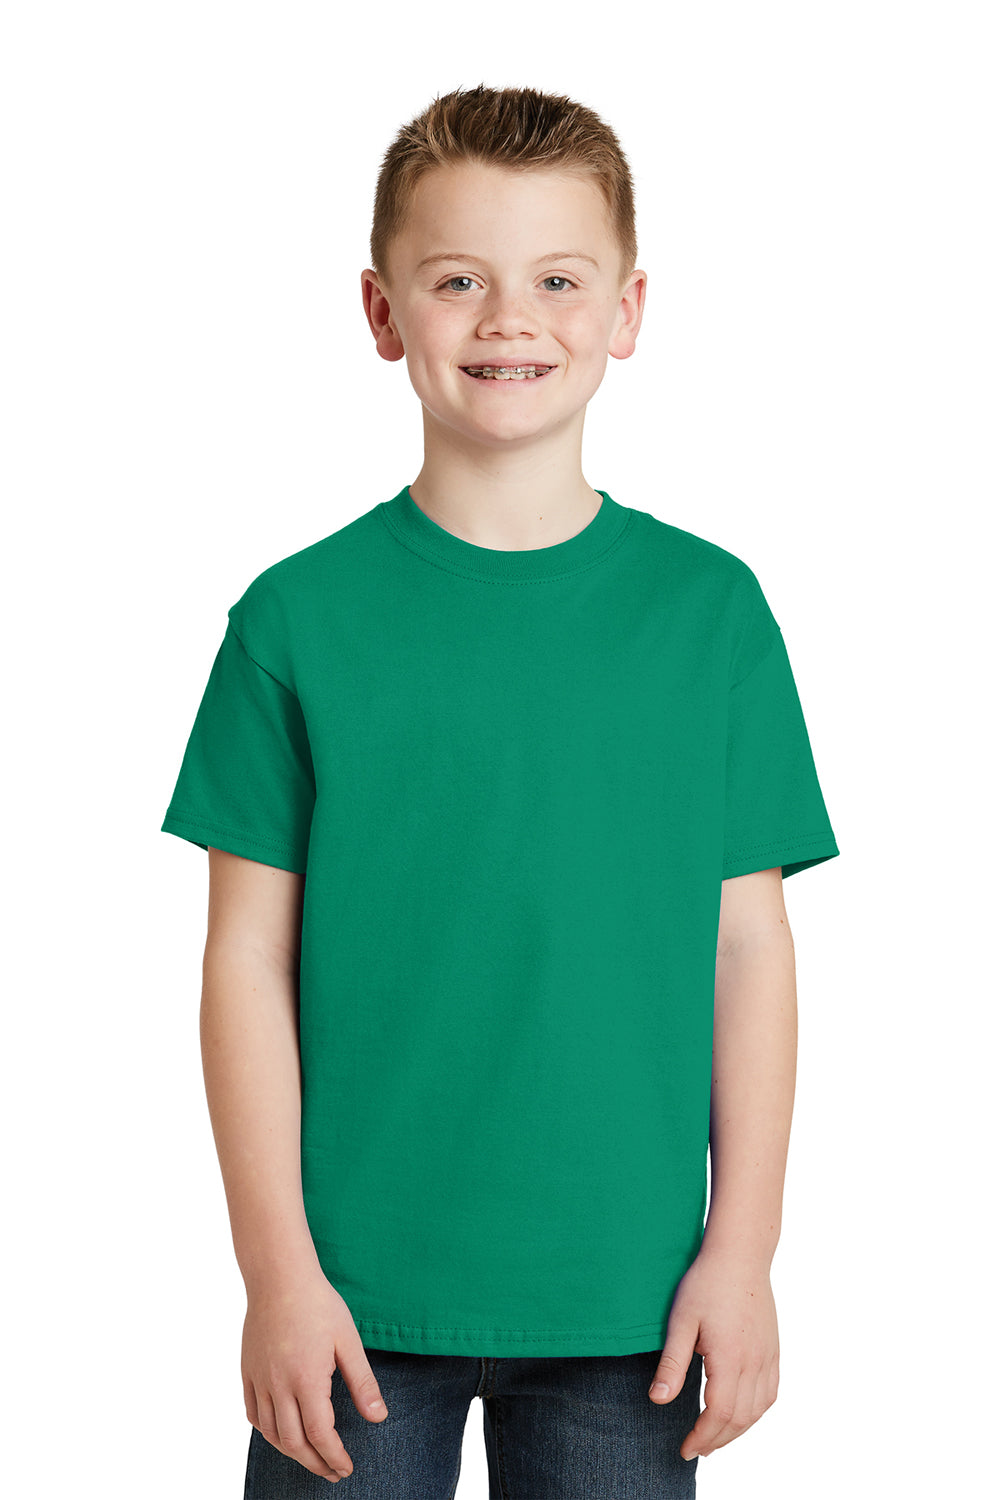 Hanes Unisex Crewneck T-Shirt Kelly Green S